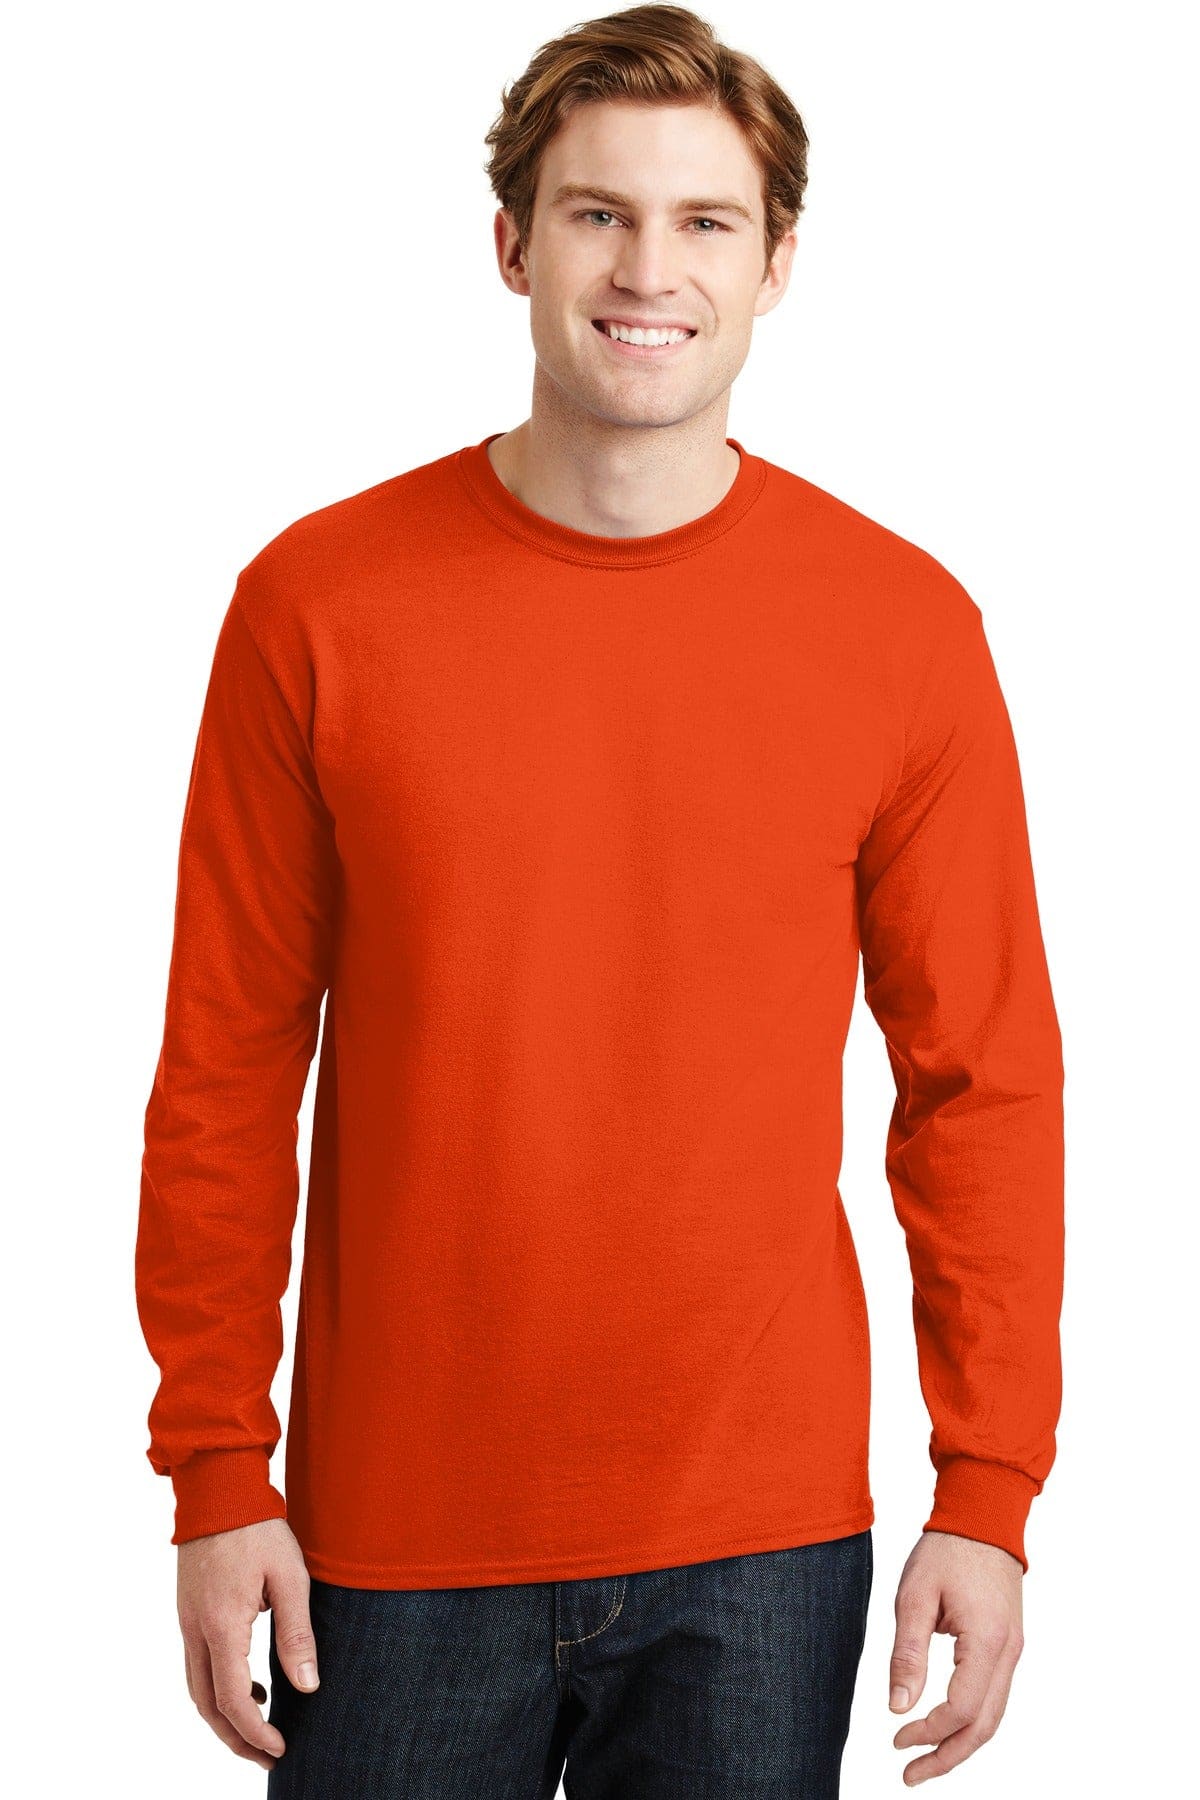 Gildan - Dryblend 50 Cotton/50 Poly Long Sleeve T - shirt 8400 - Activewear T